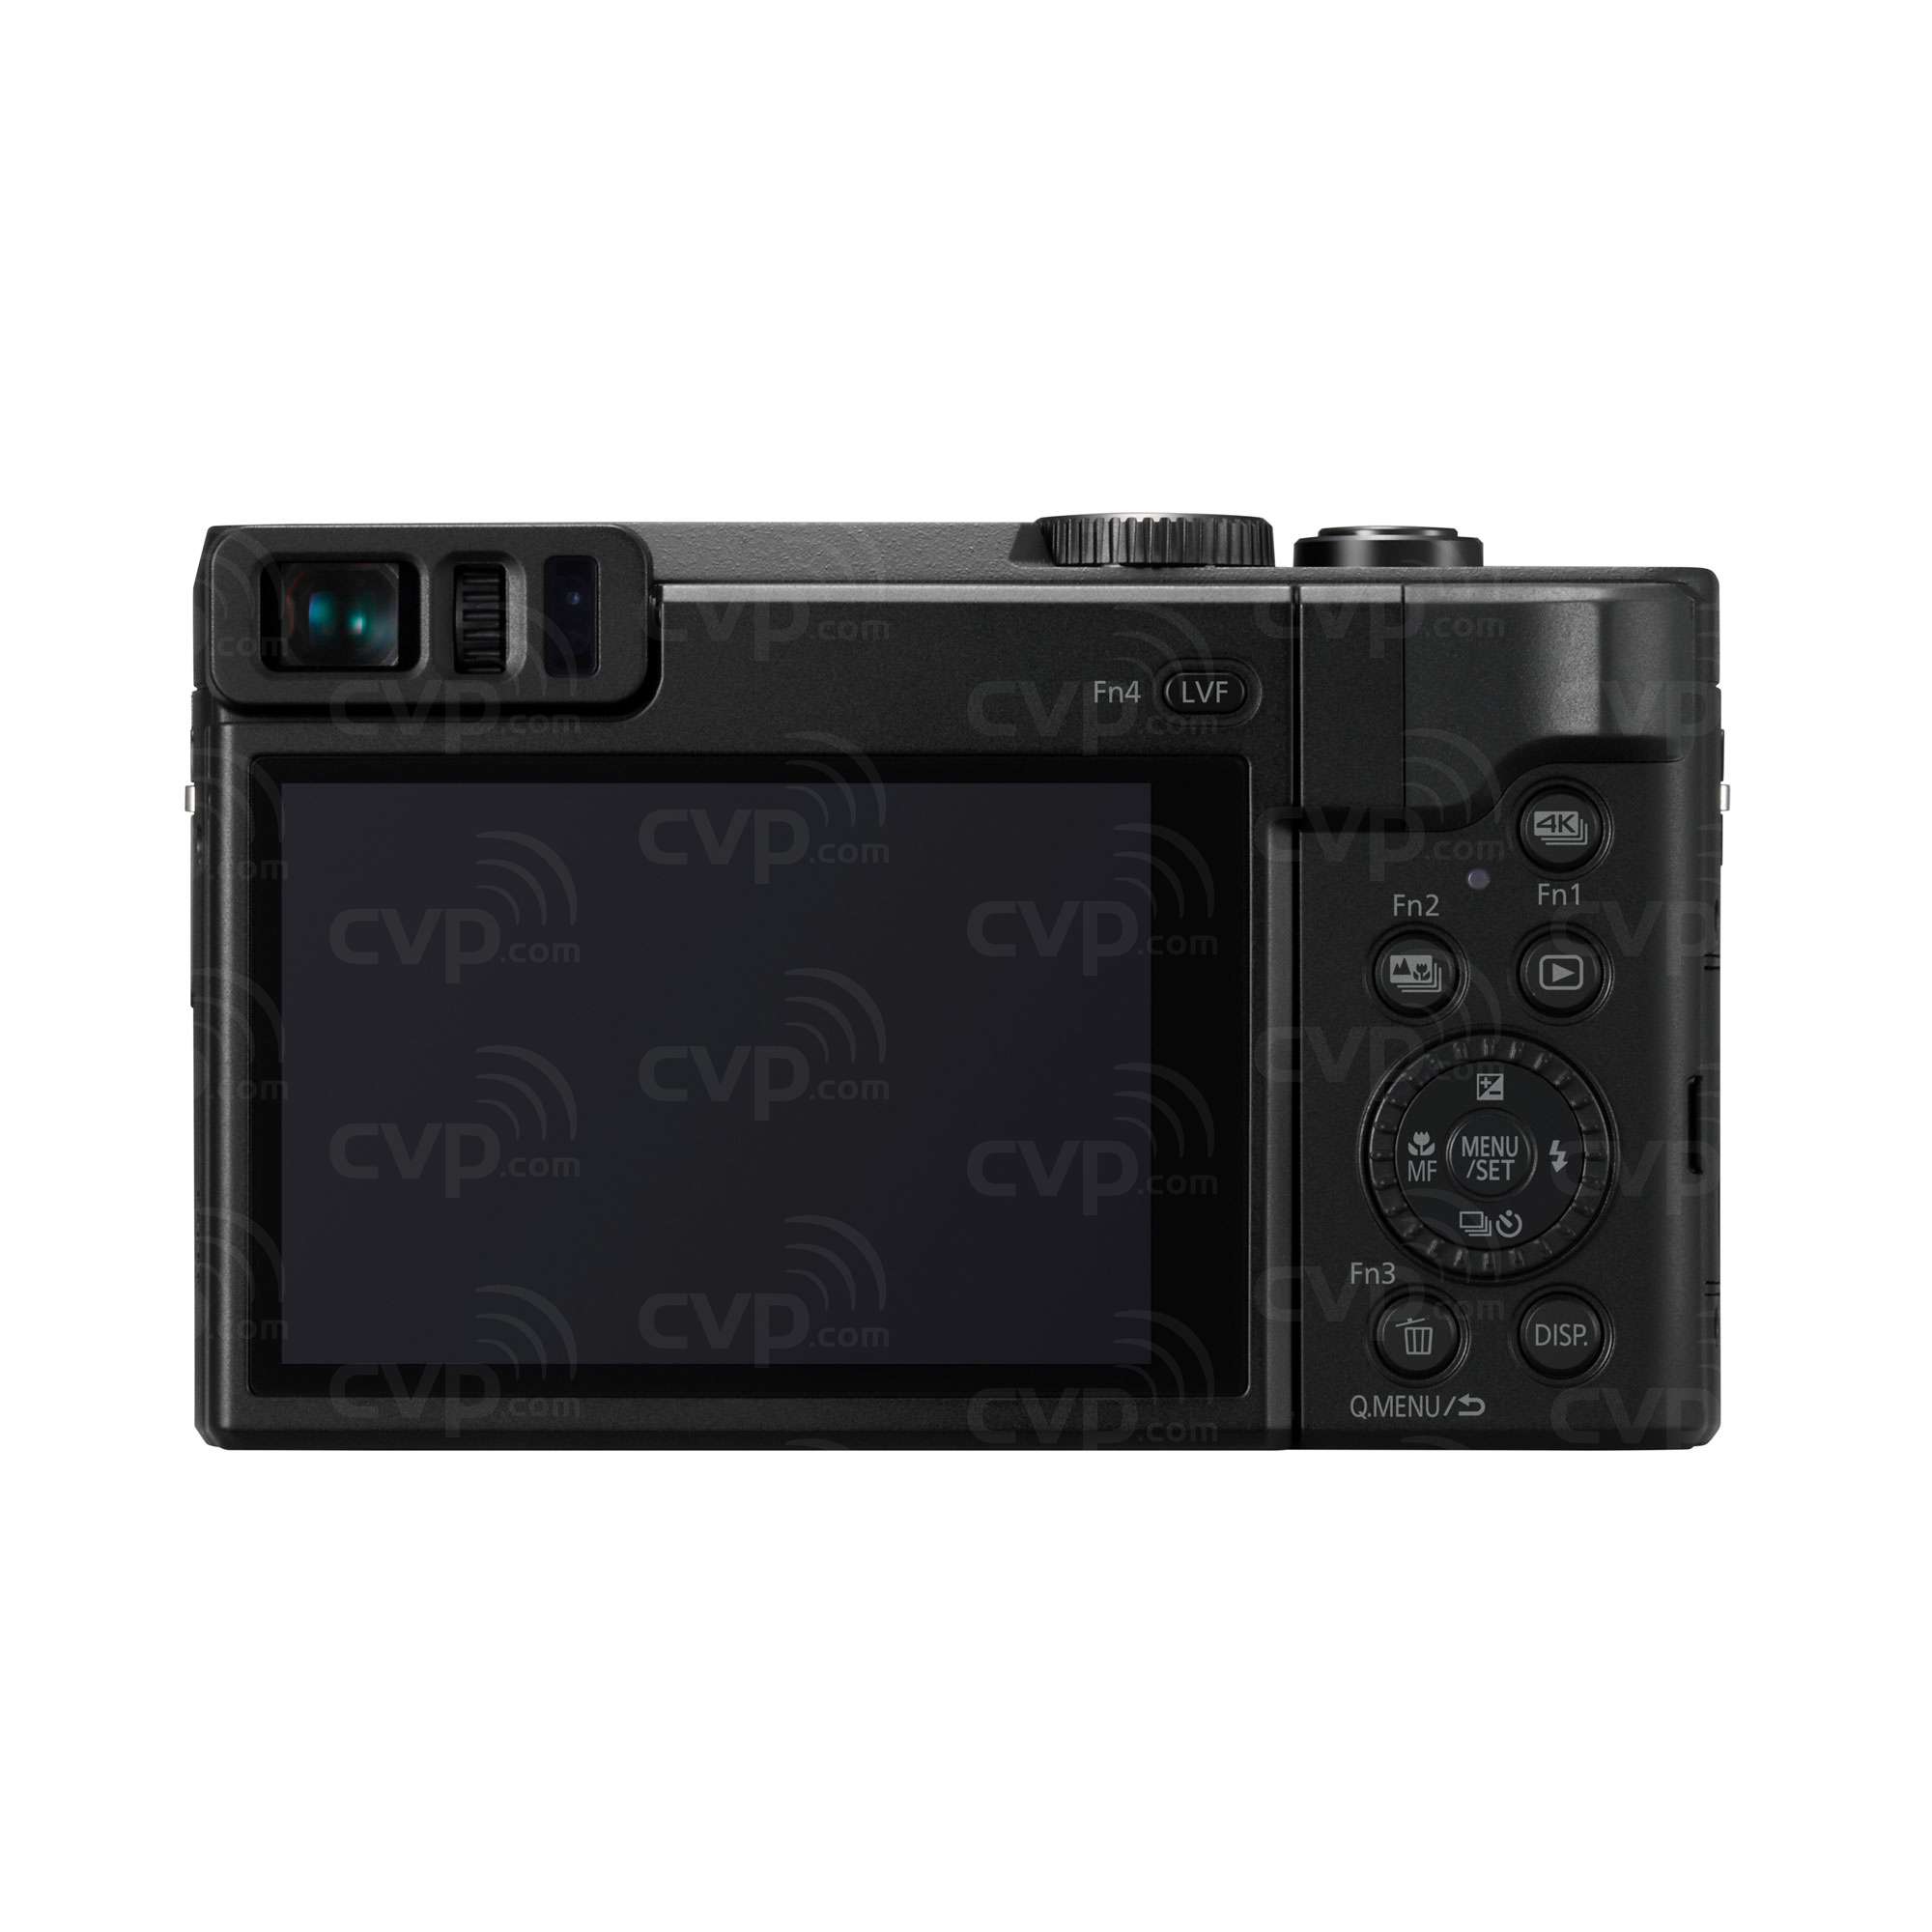 Buy - Panasonic Lumix DC-TZ90 20.3 MP 30x Digital Compact Camera with